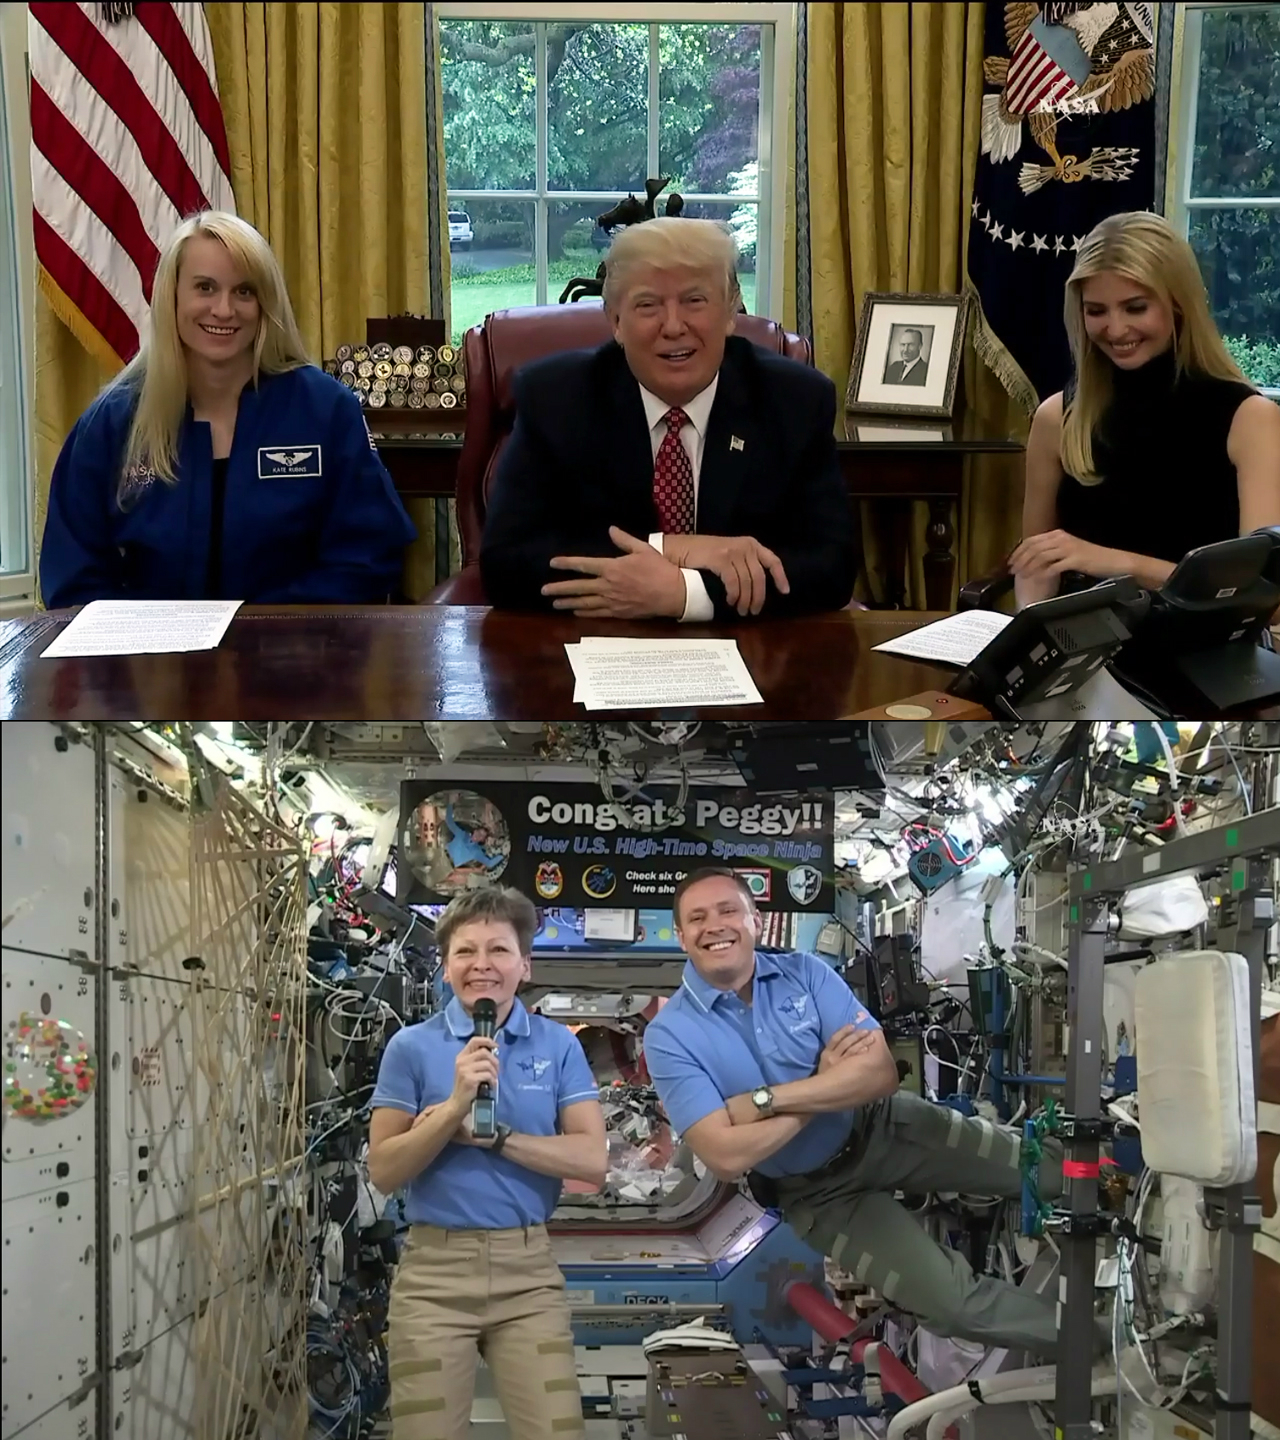 NASA astronauts Peggy Whitson and Jack Fischer speak to President Trump